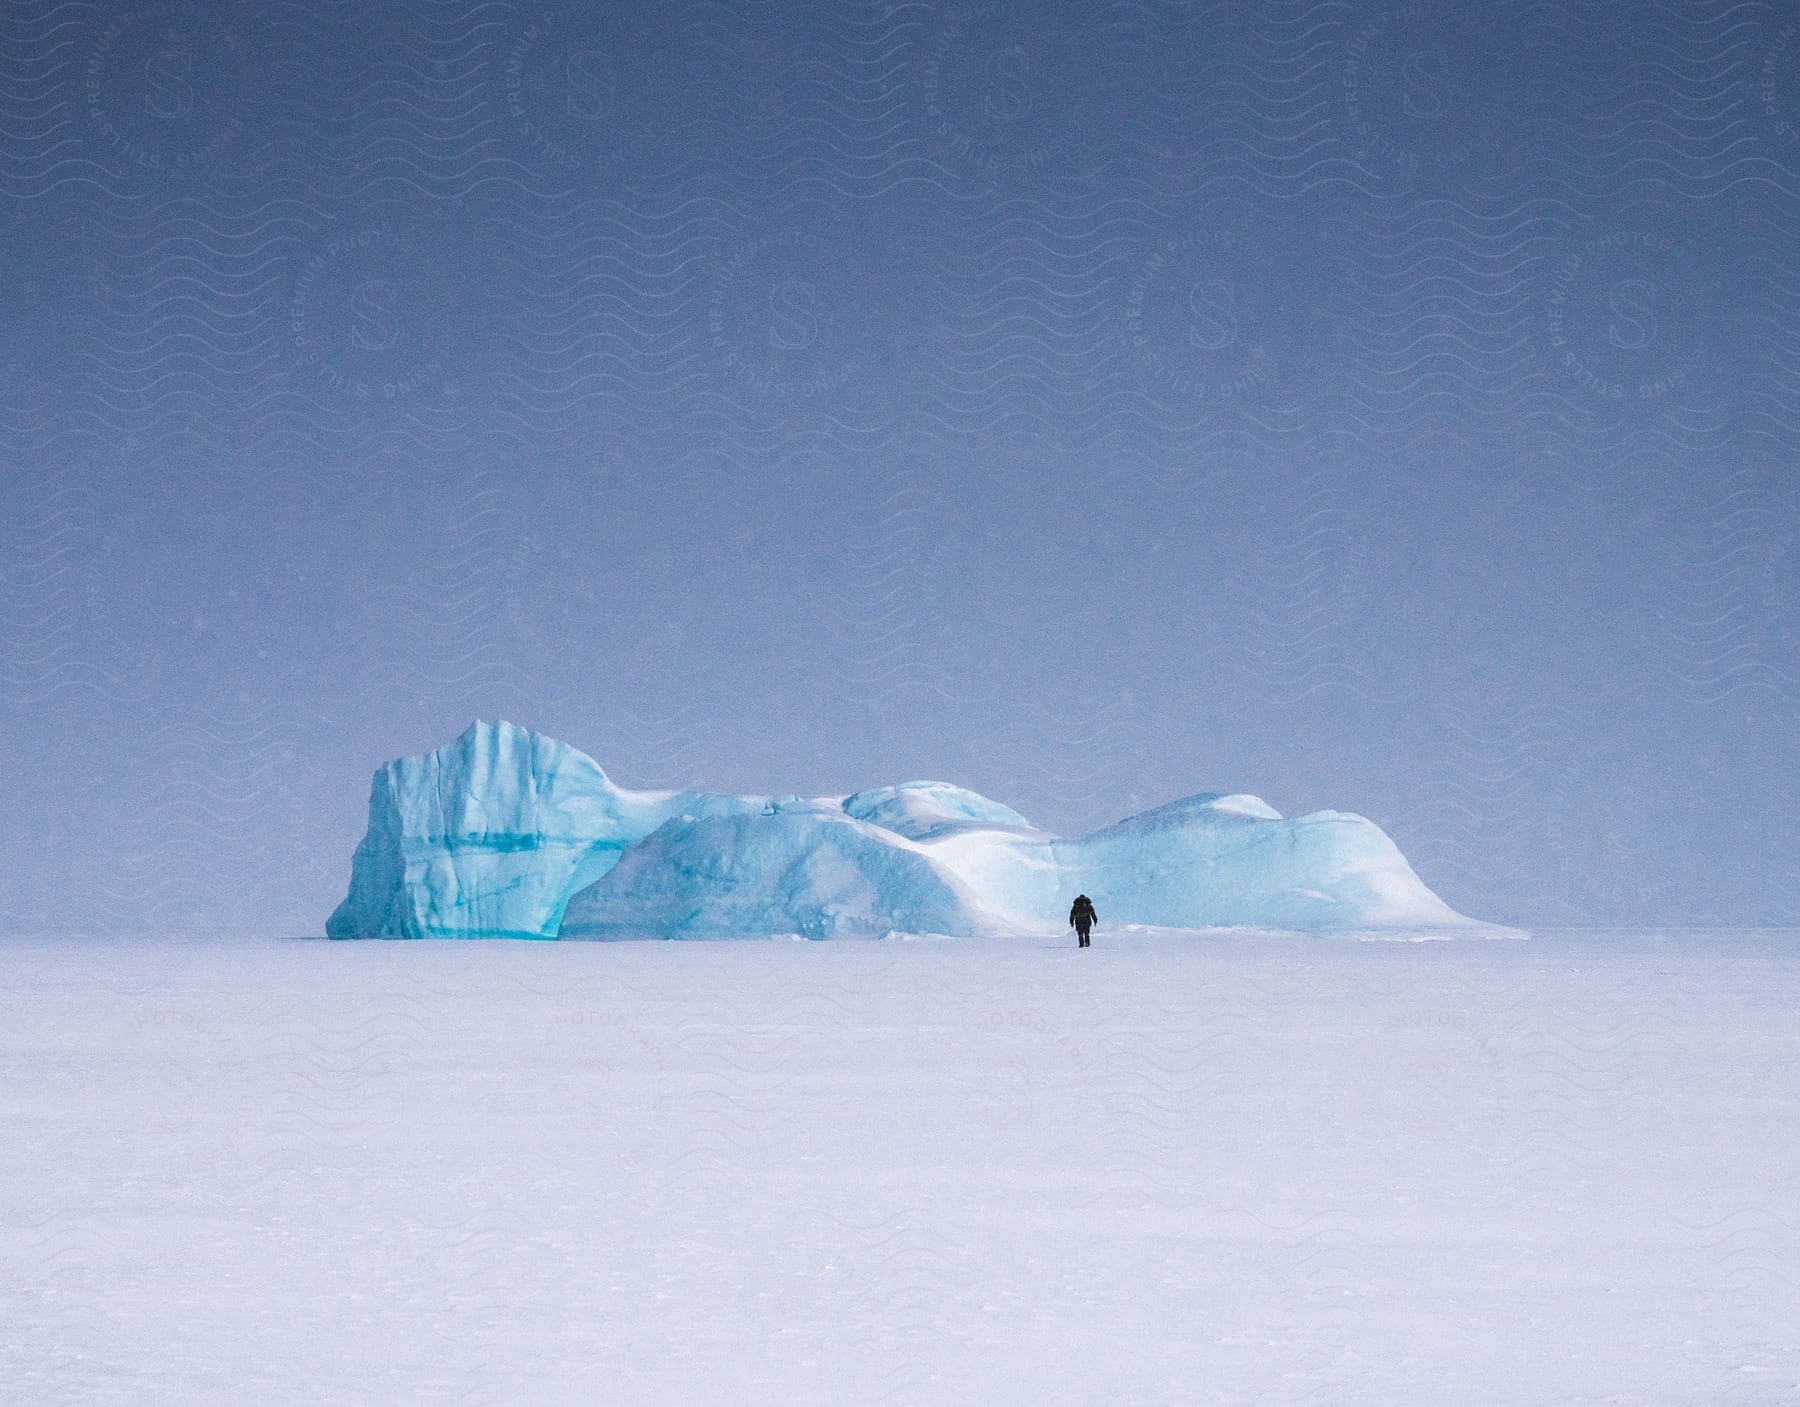 A person walking on a glacier